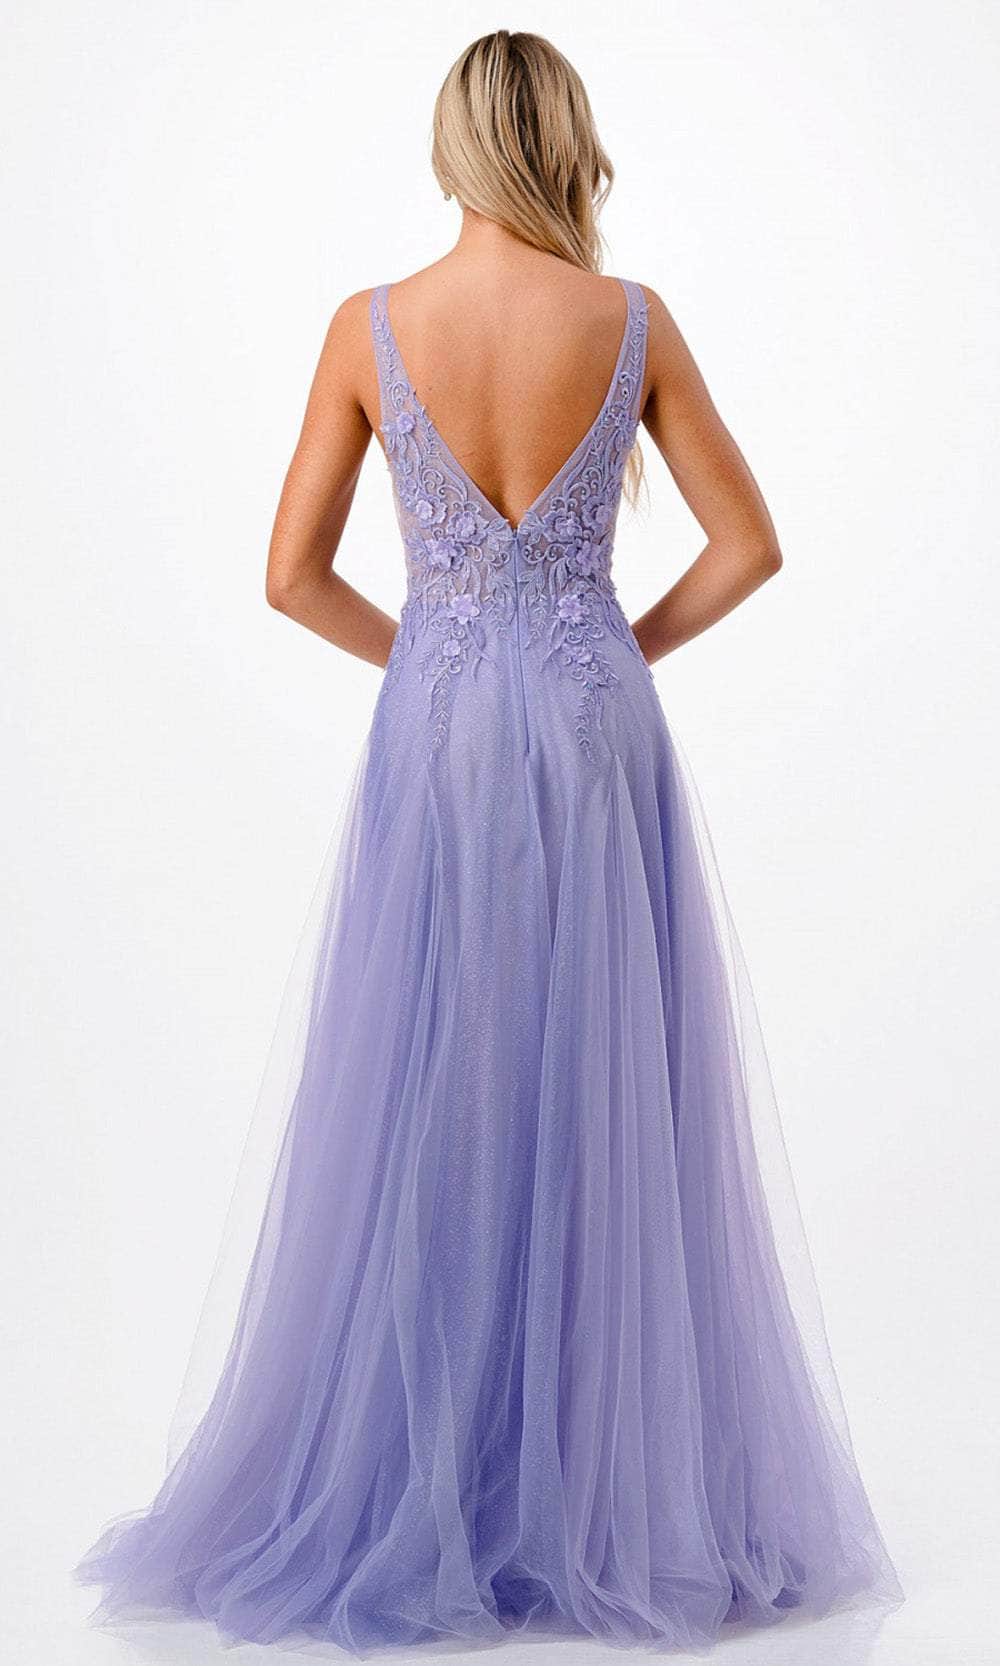 Aspeed Design P2109 - A-Line Prom Dress